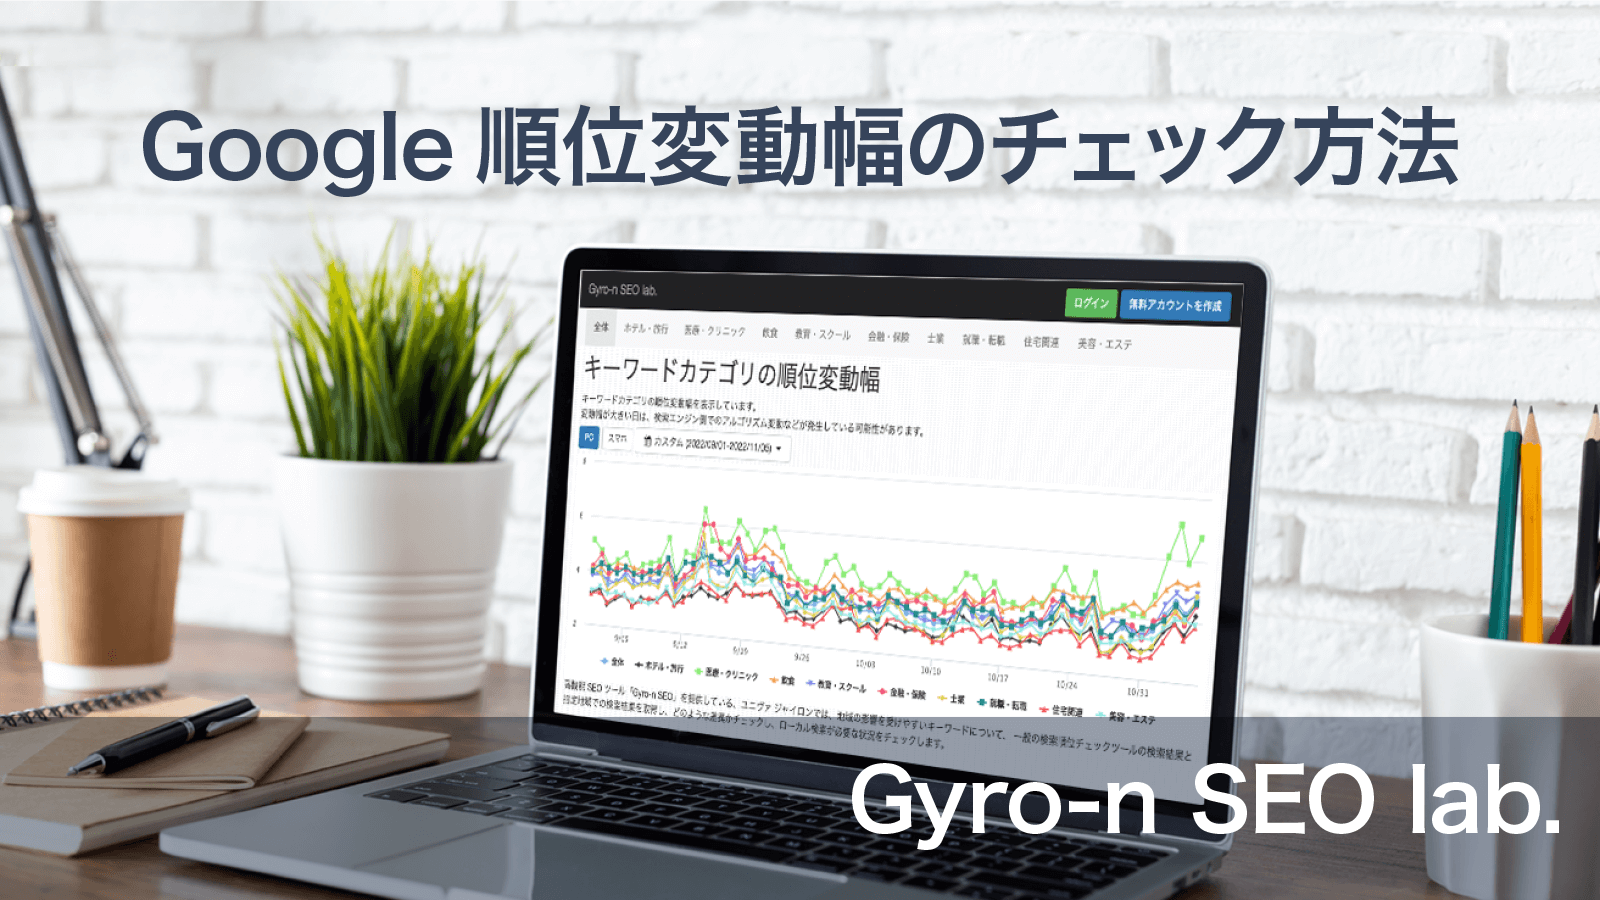 Google順位変動をチェック「Gyro-n SEO lab.」